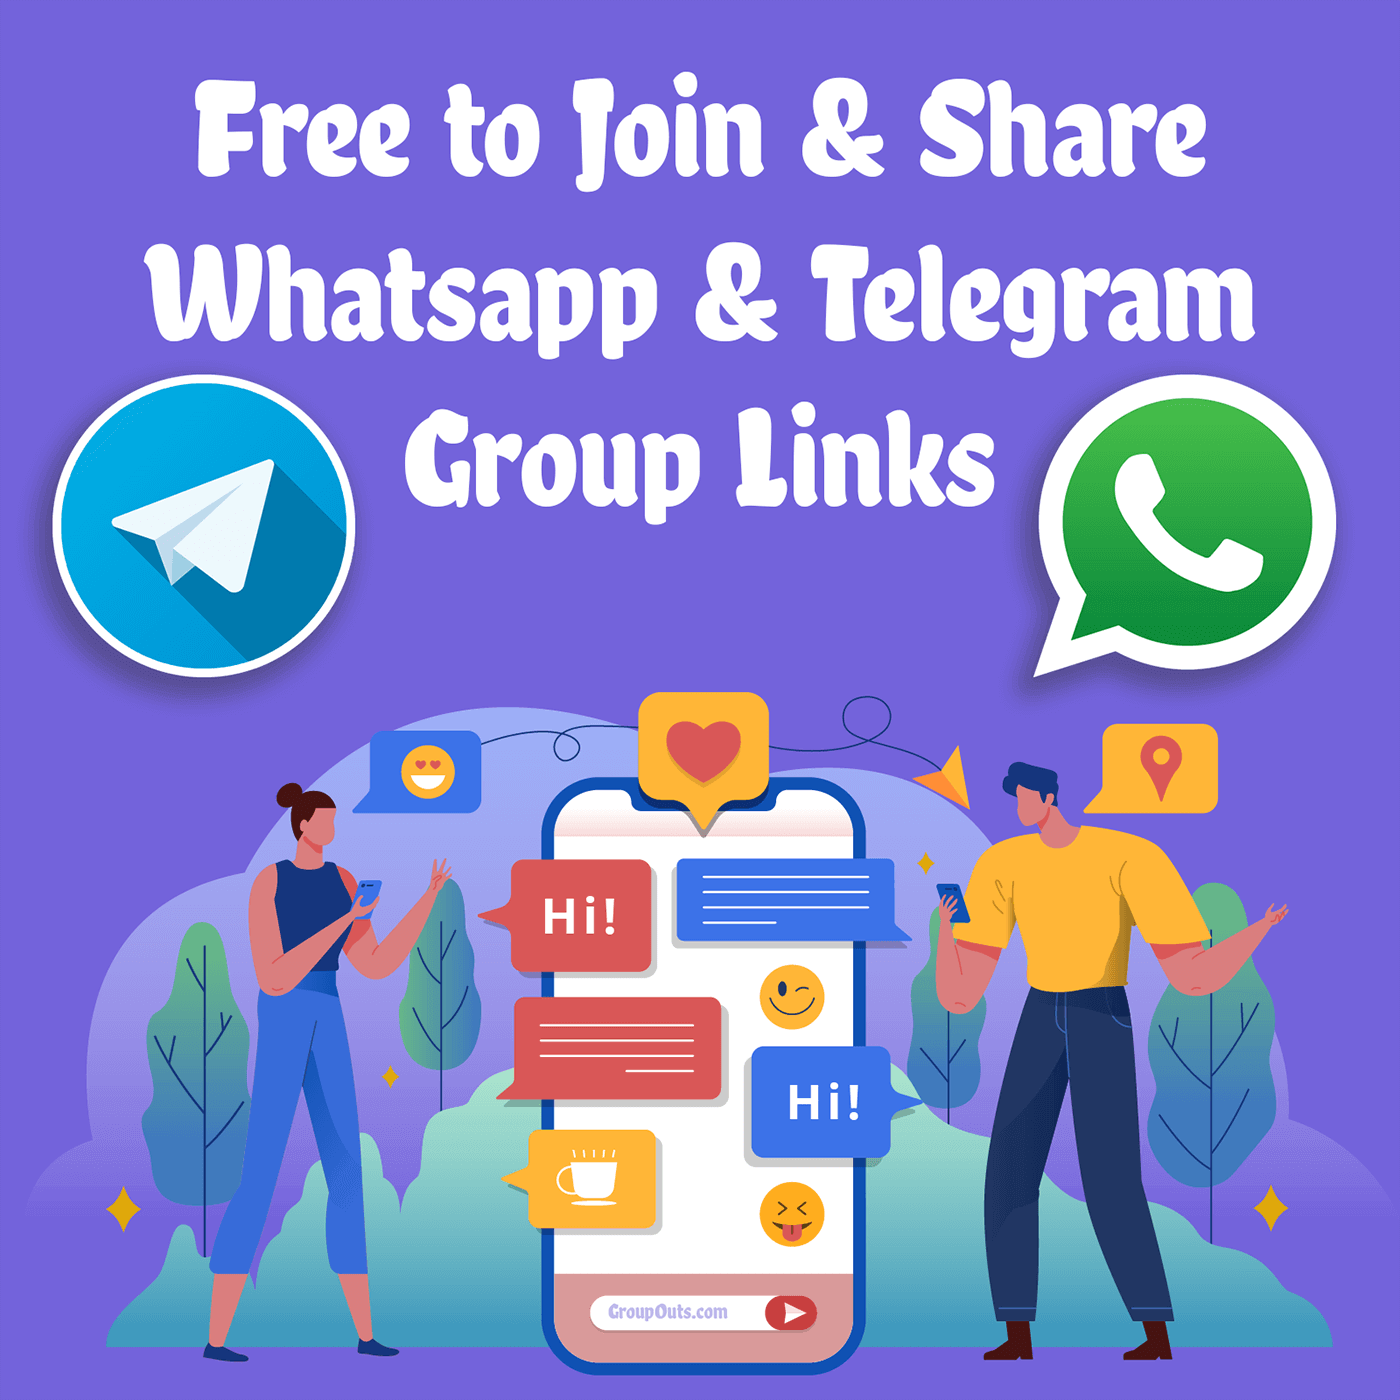 Unlimted WhatsApp & Telegram Group Links